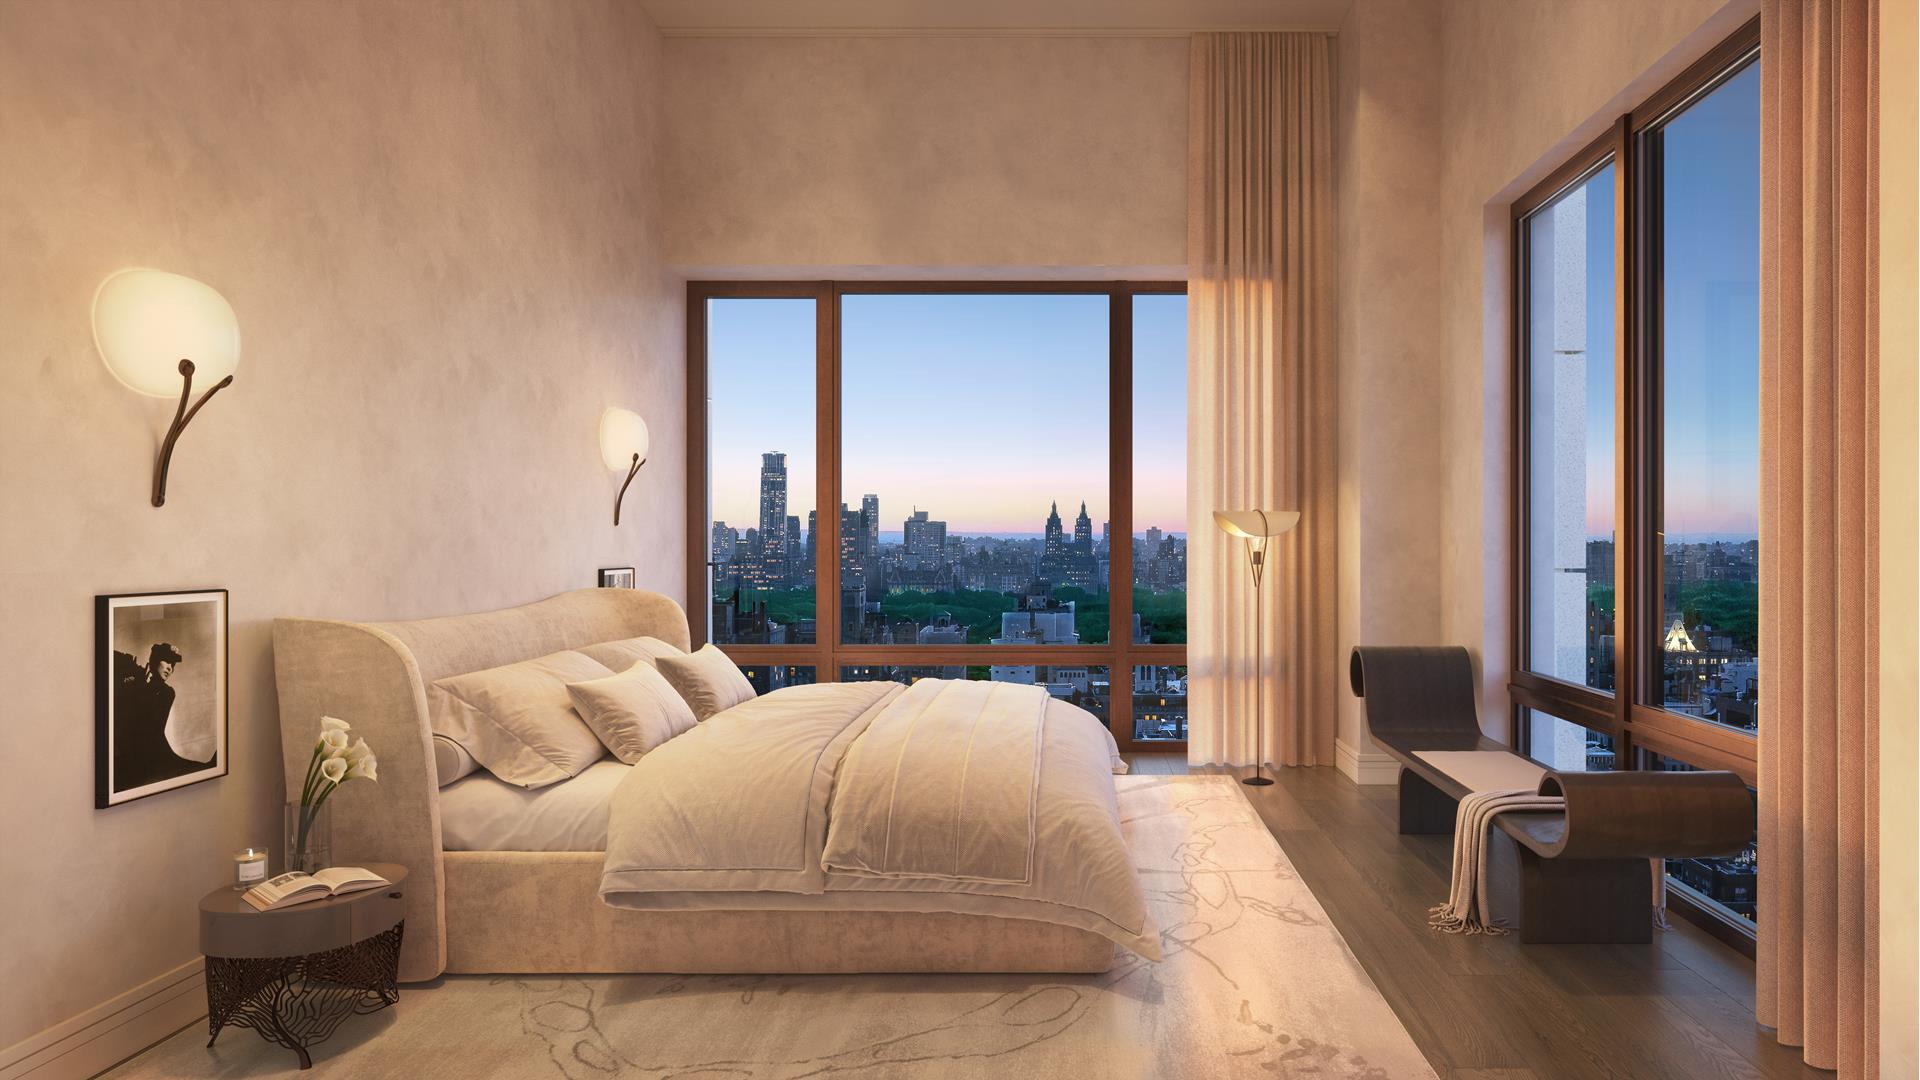 201 East 74th Street Floor28, Lenox Hill, Upper East Side, NYC - 5 Bedrooms  
4.5 Bathrooms  
9 Rooms - 